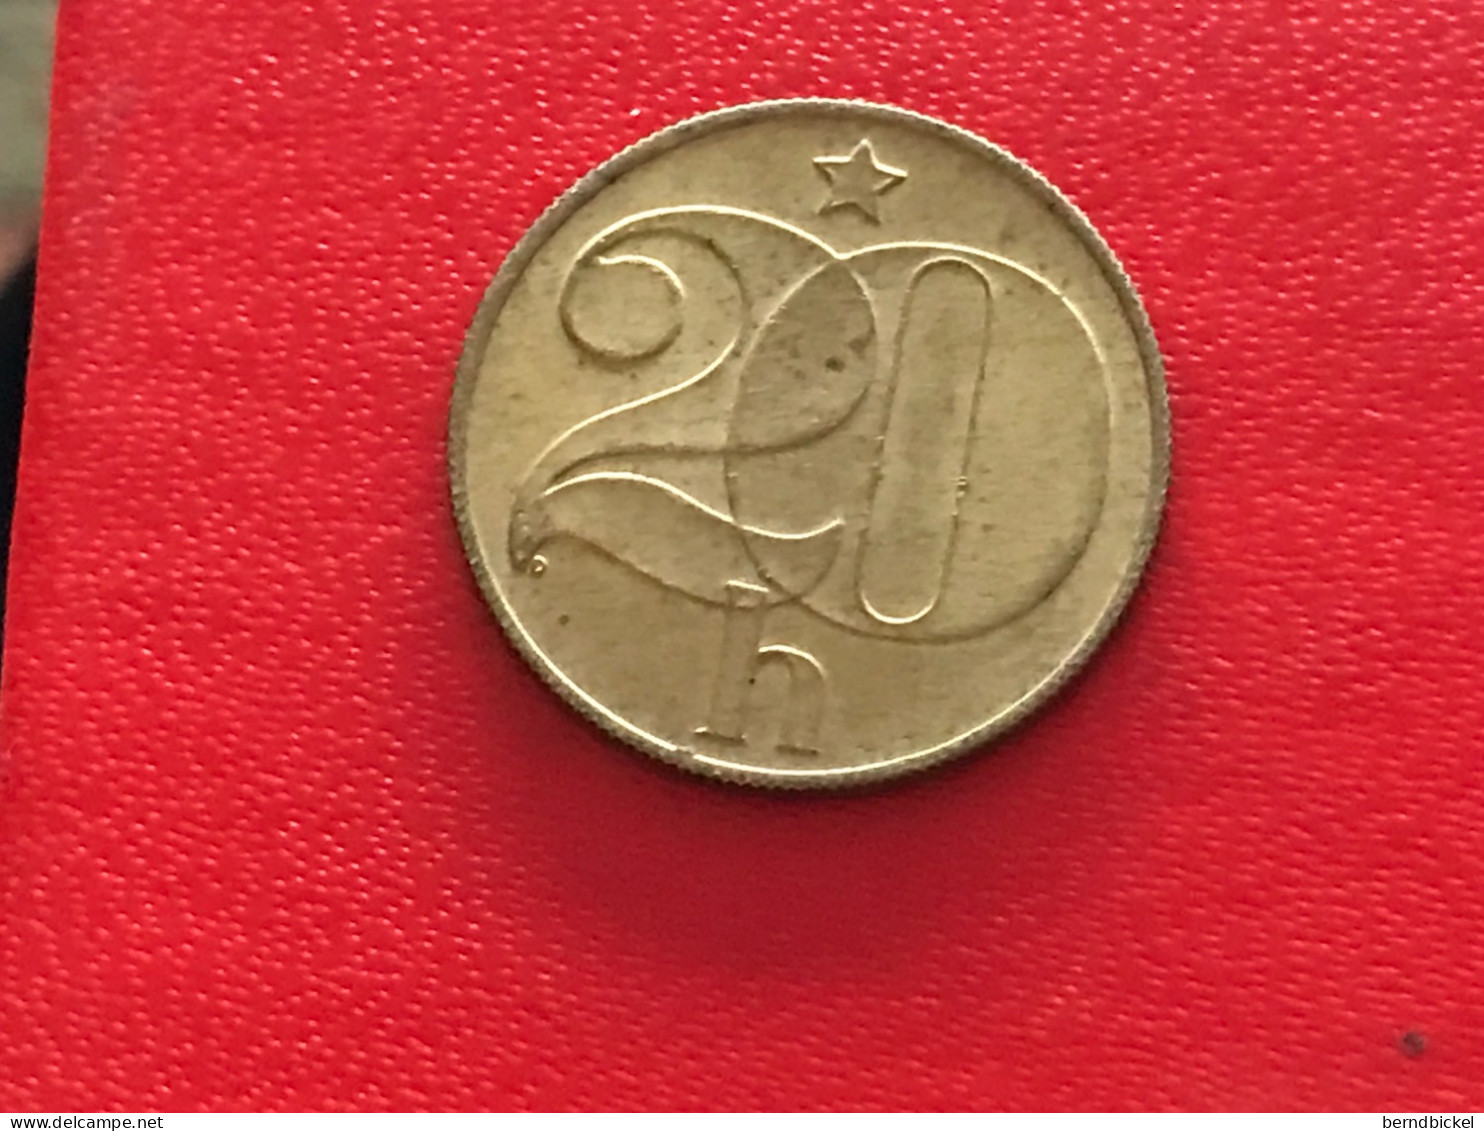 Münze Münzen Umlaufmünze Tschechoslowakei 20 Heller 1985 - Czechoslovakia